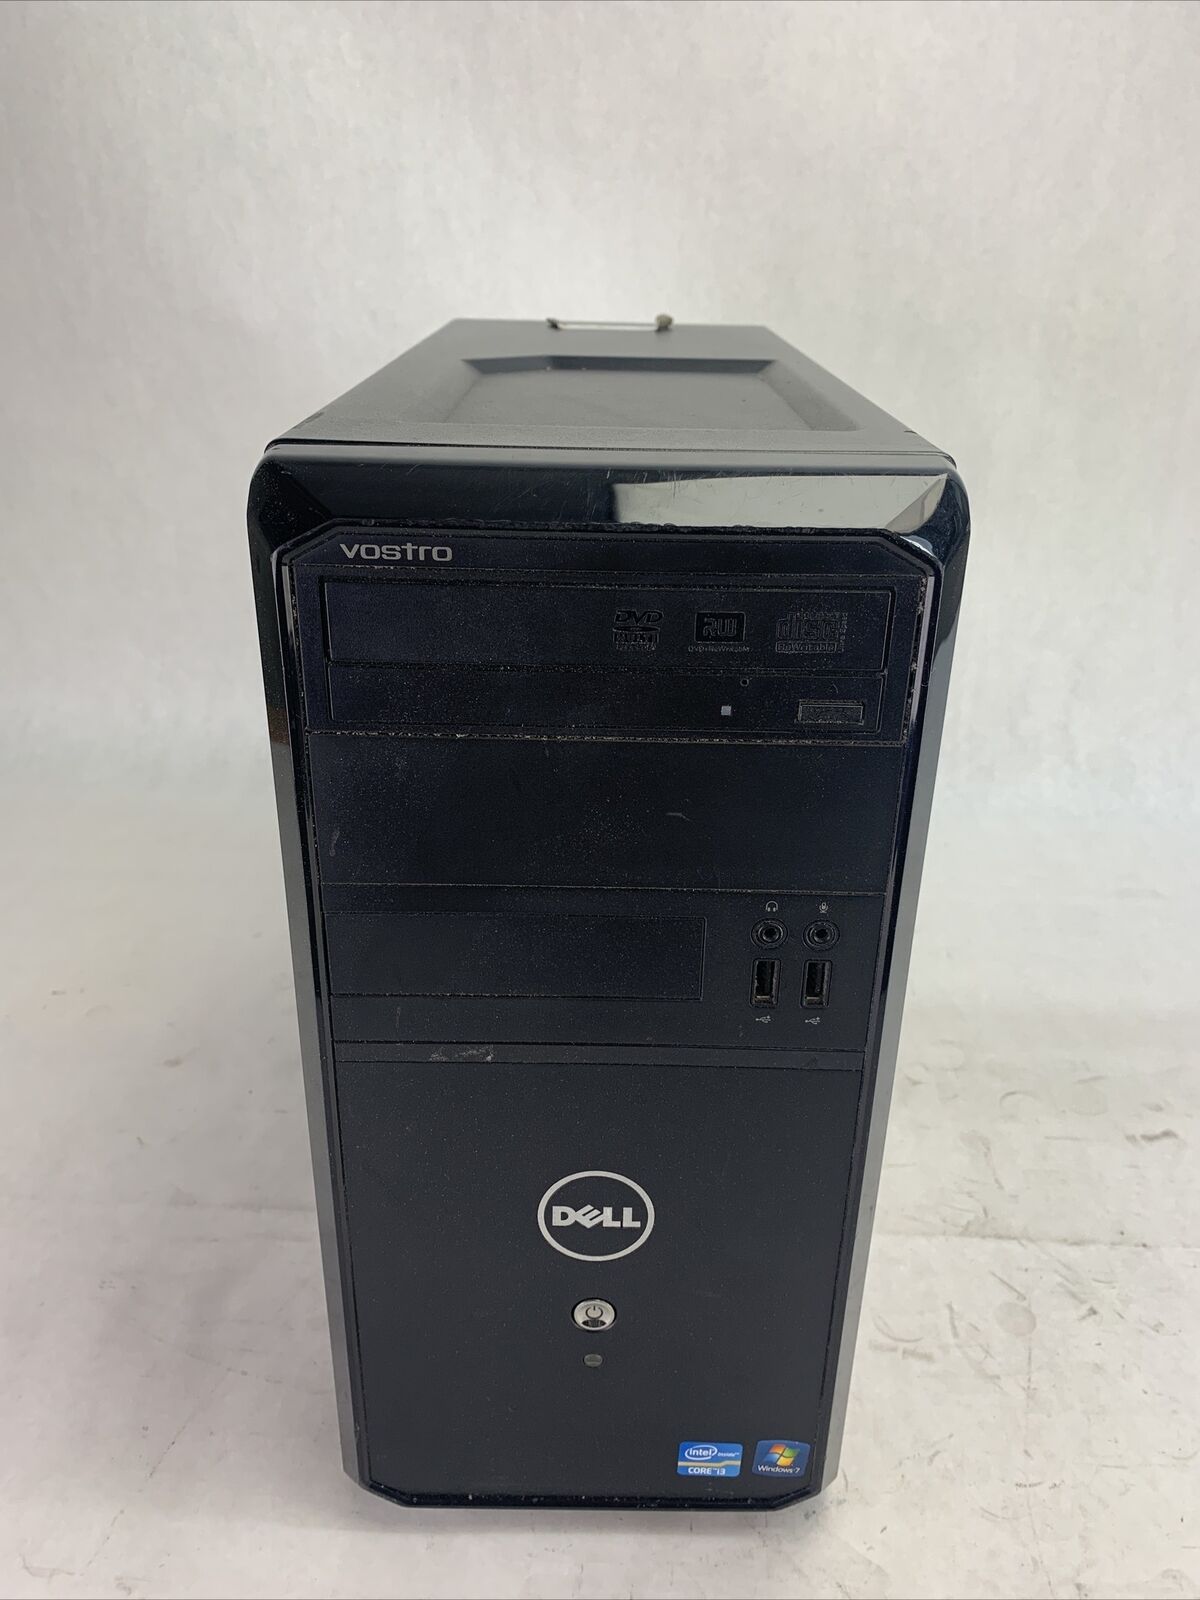 Dell Vostro 260 i3-2120 3.3GHz + 3GB RAM (NO HDD NO OS)